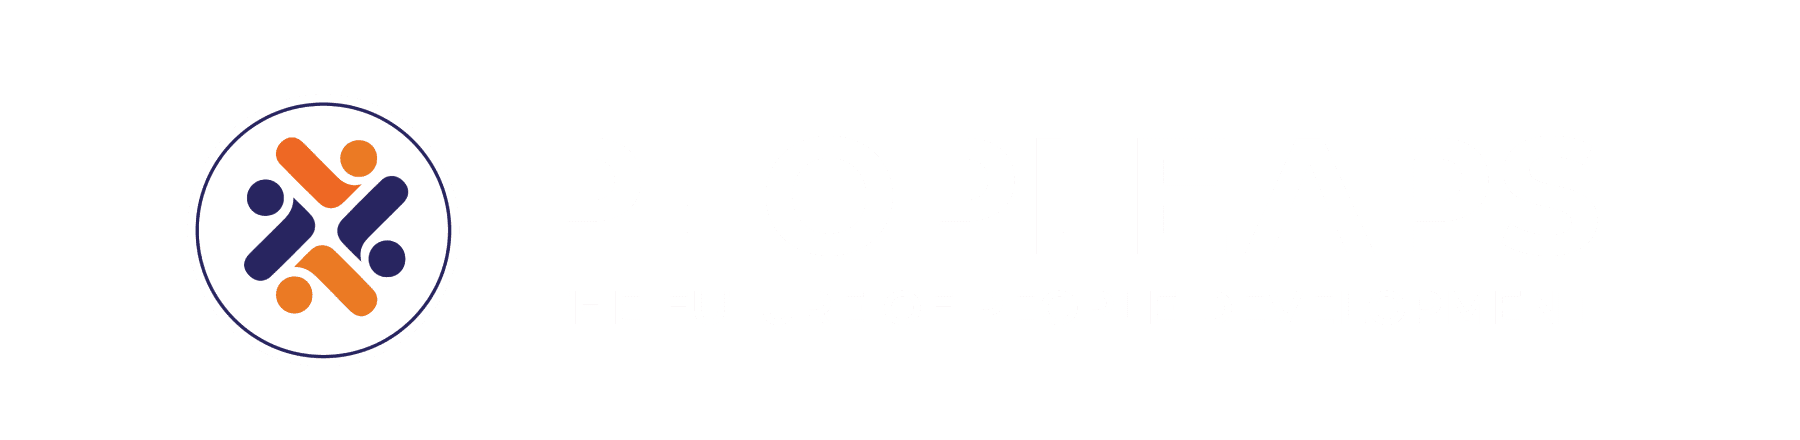 PEOPLElogy Peopleaps